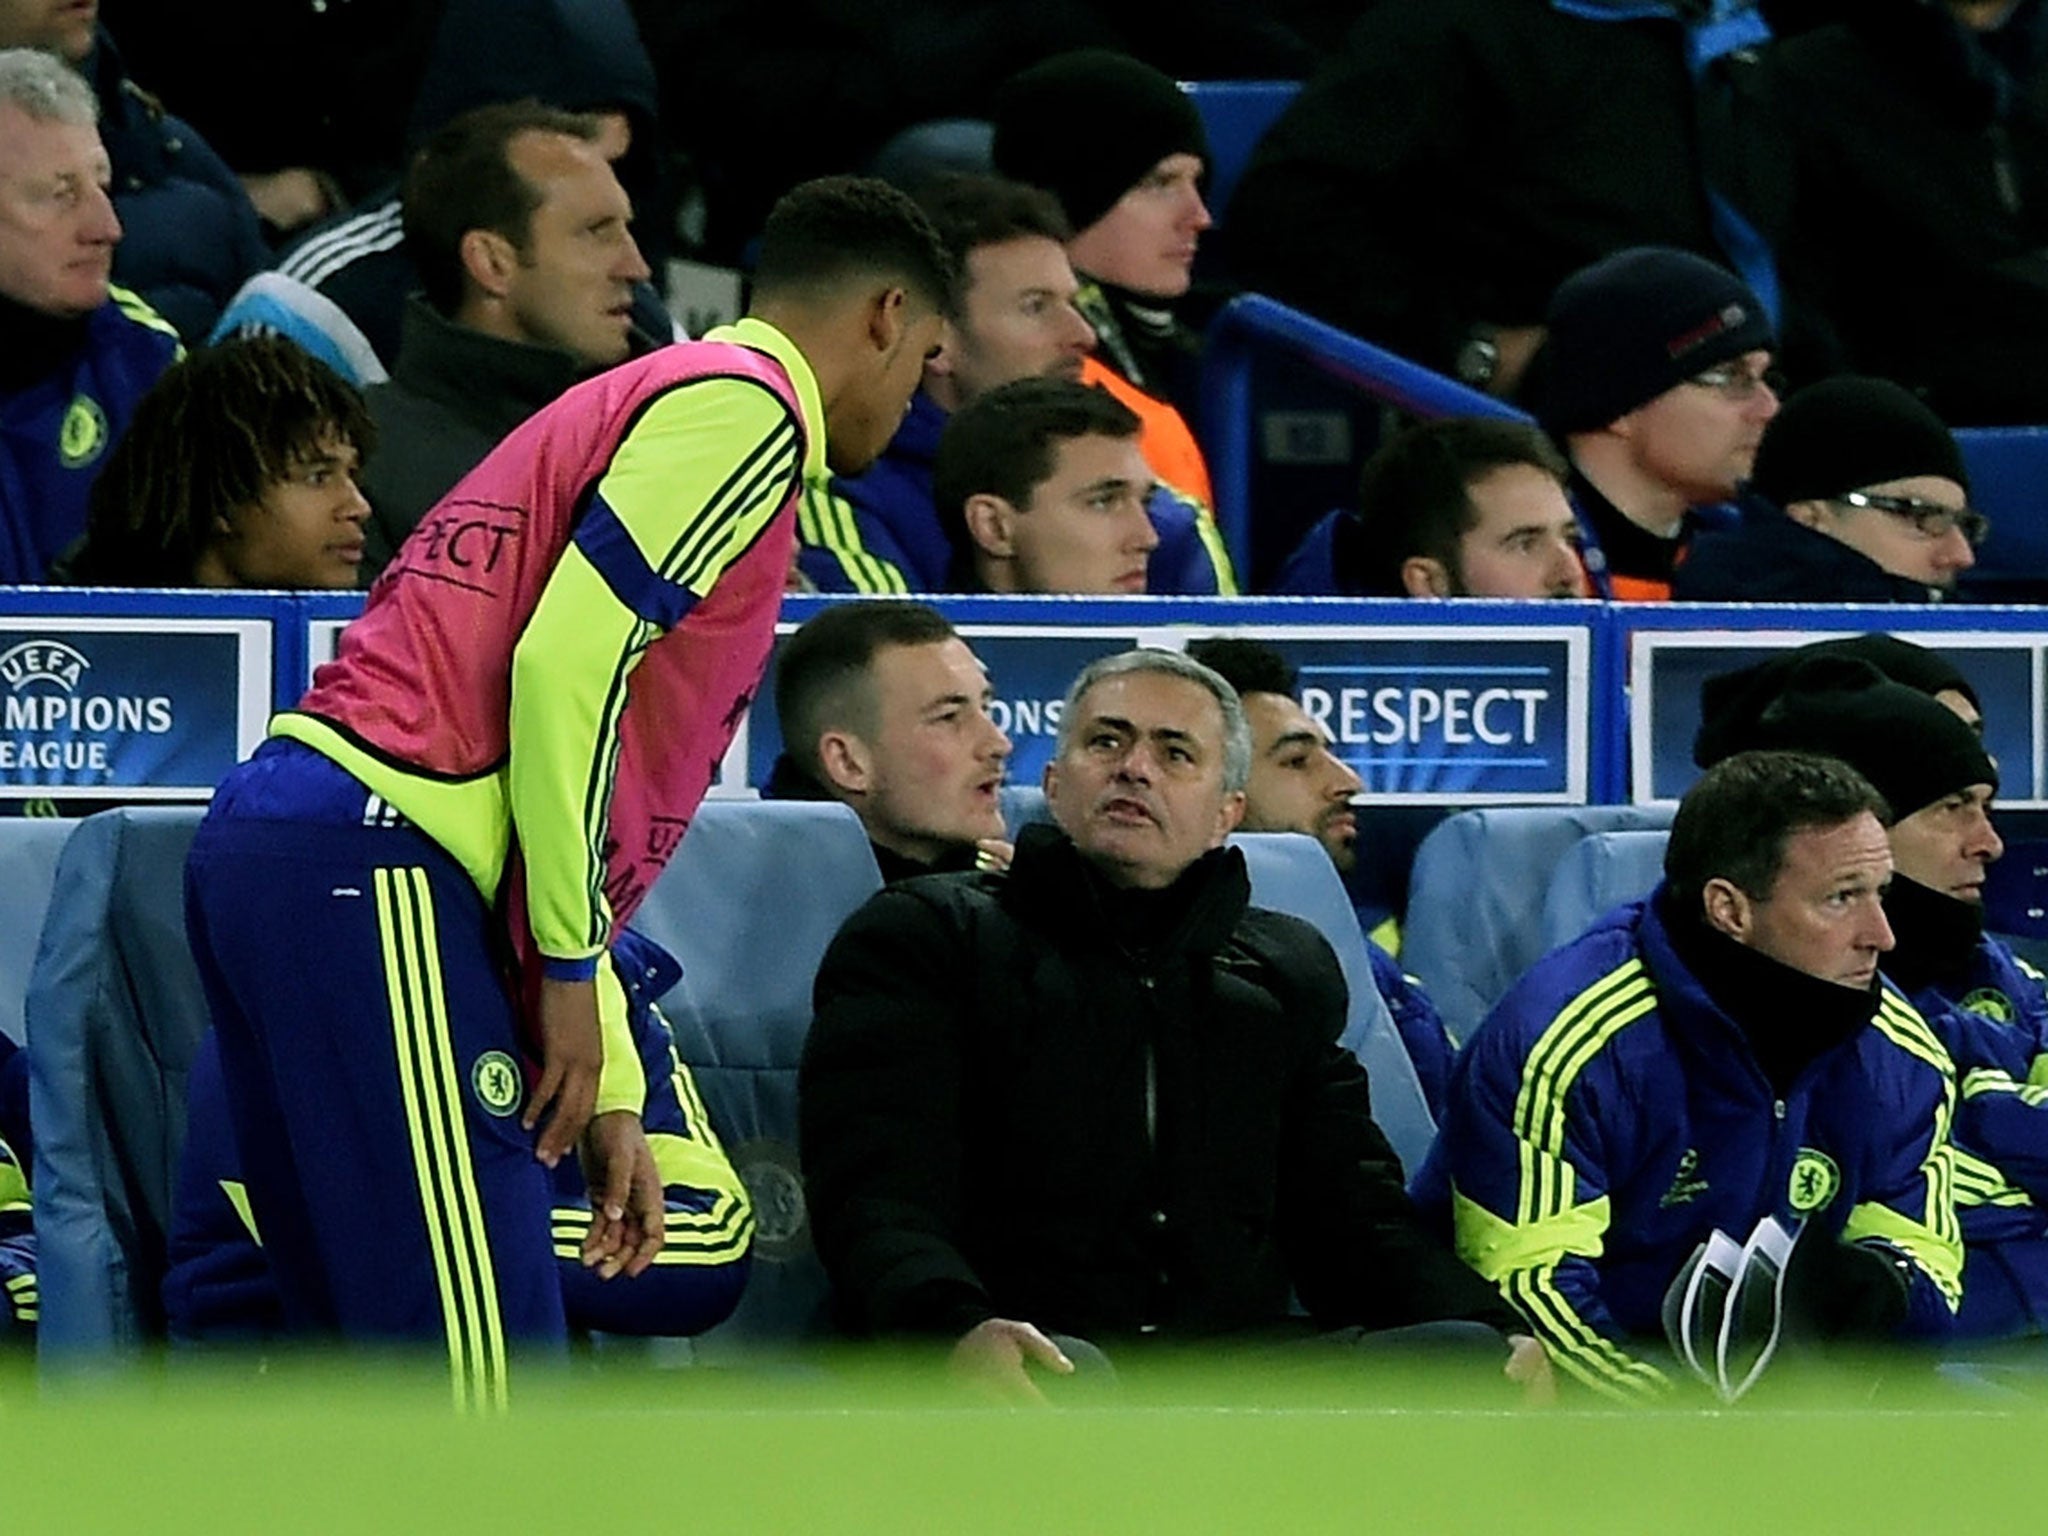 Mourinho speaks with Loftus-Cheek before he came on